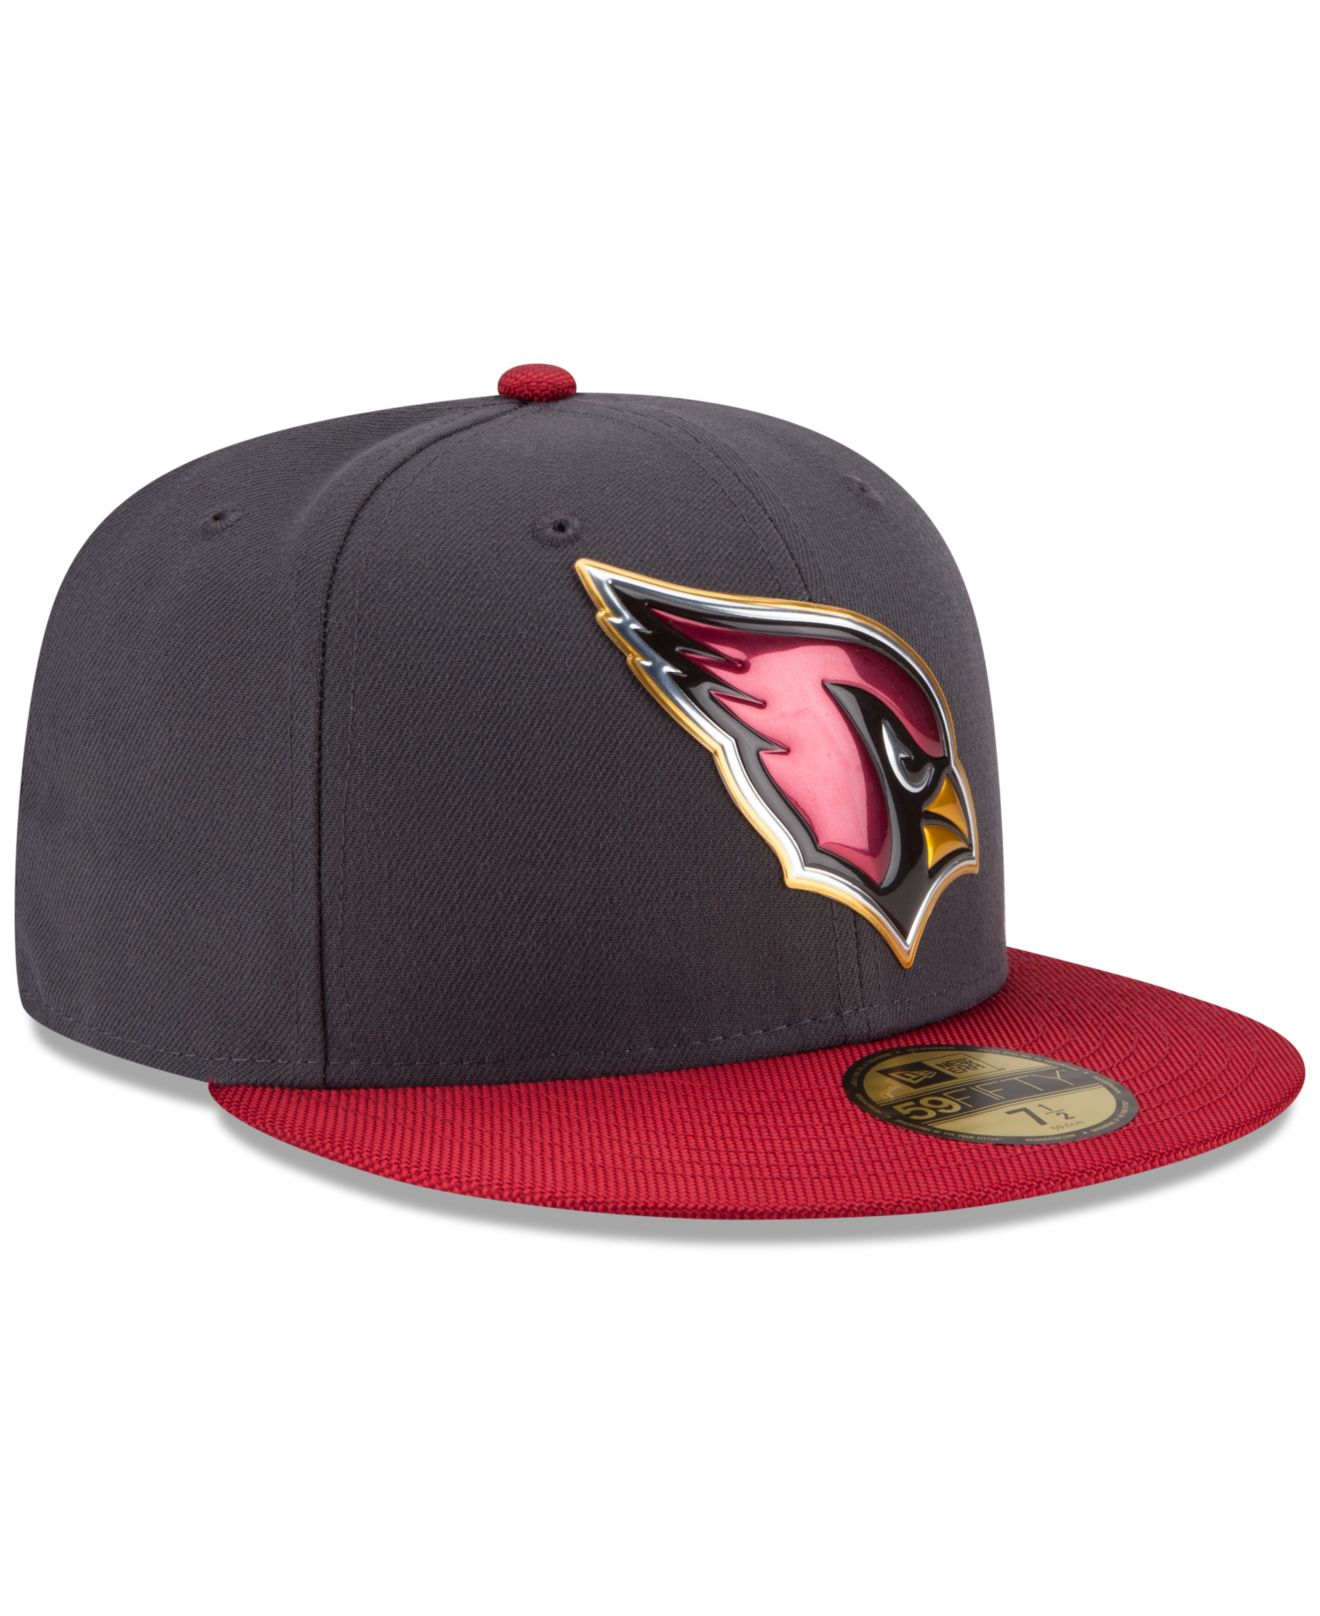 az cardinals gold collection hat